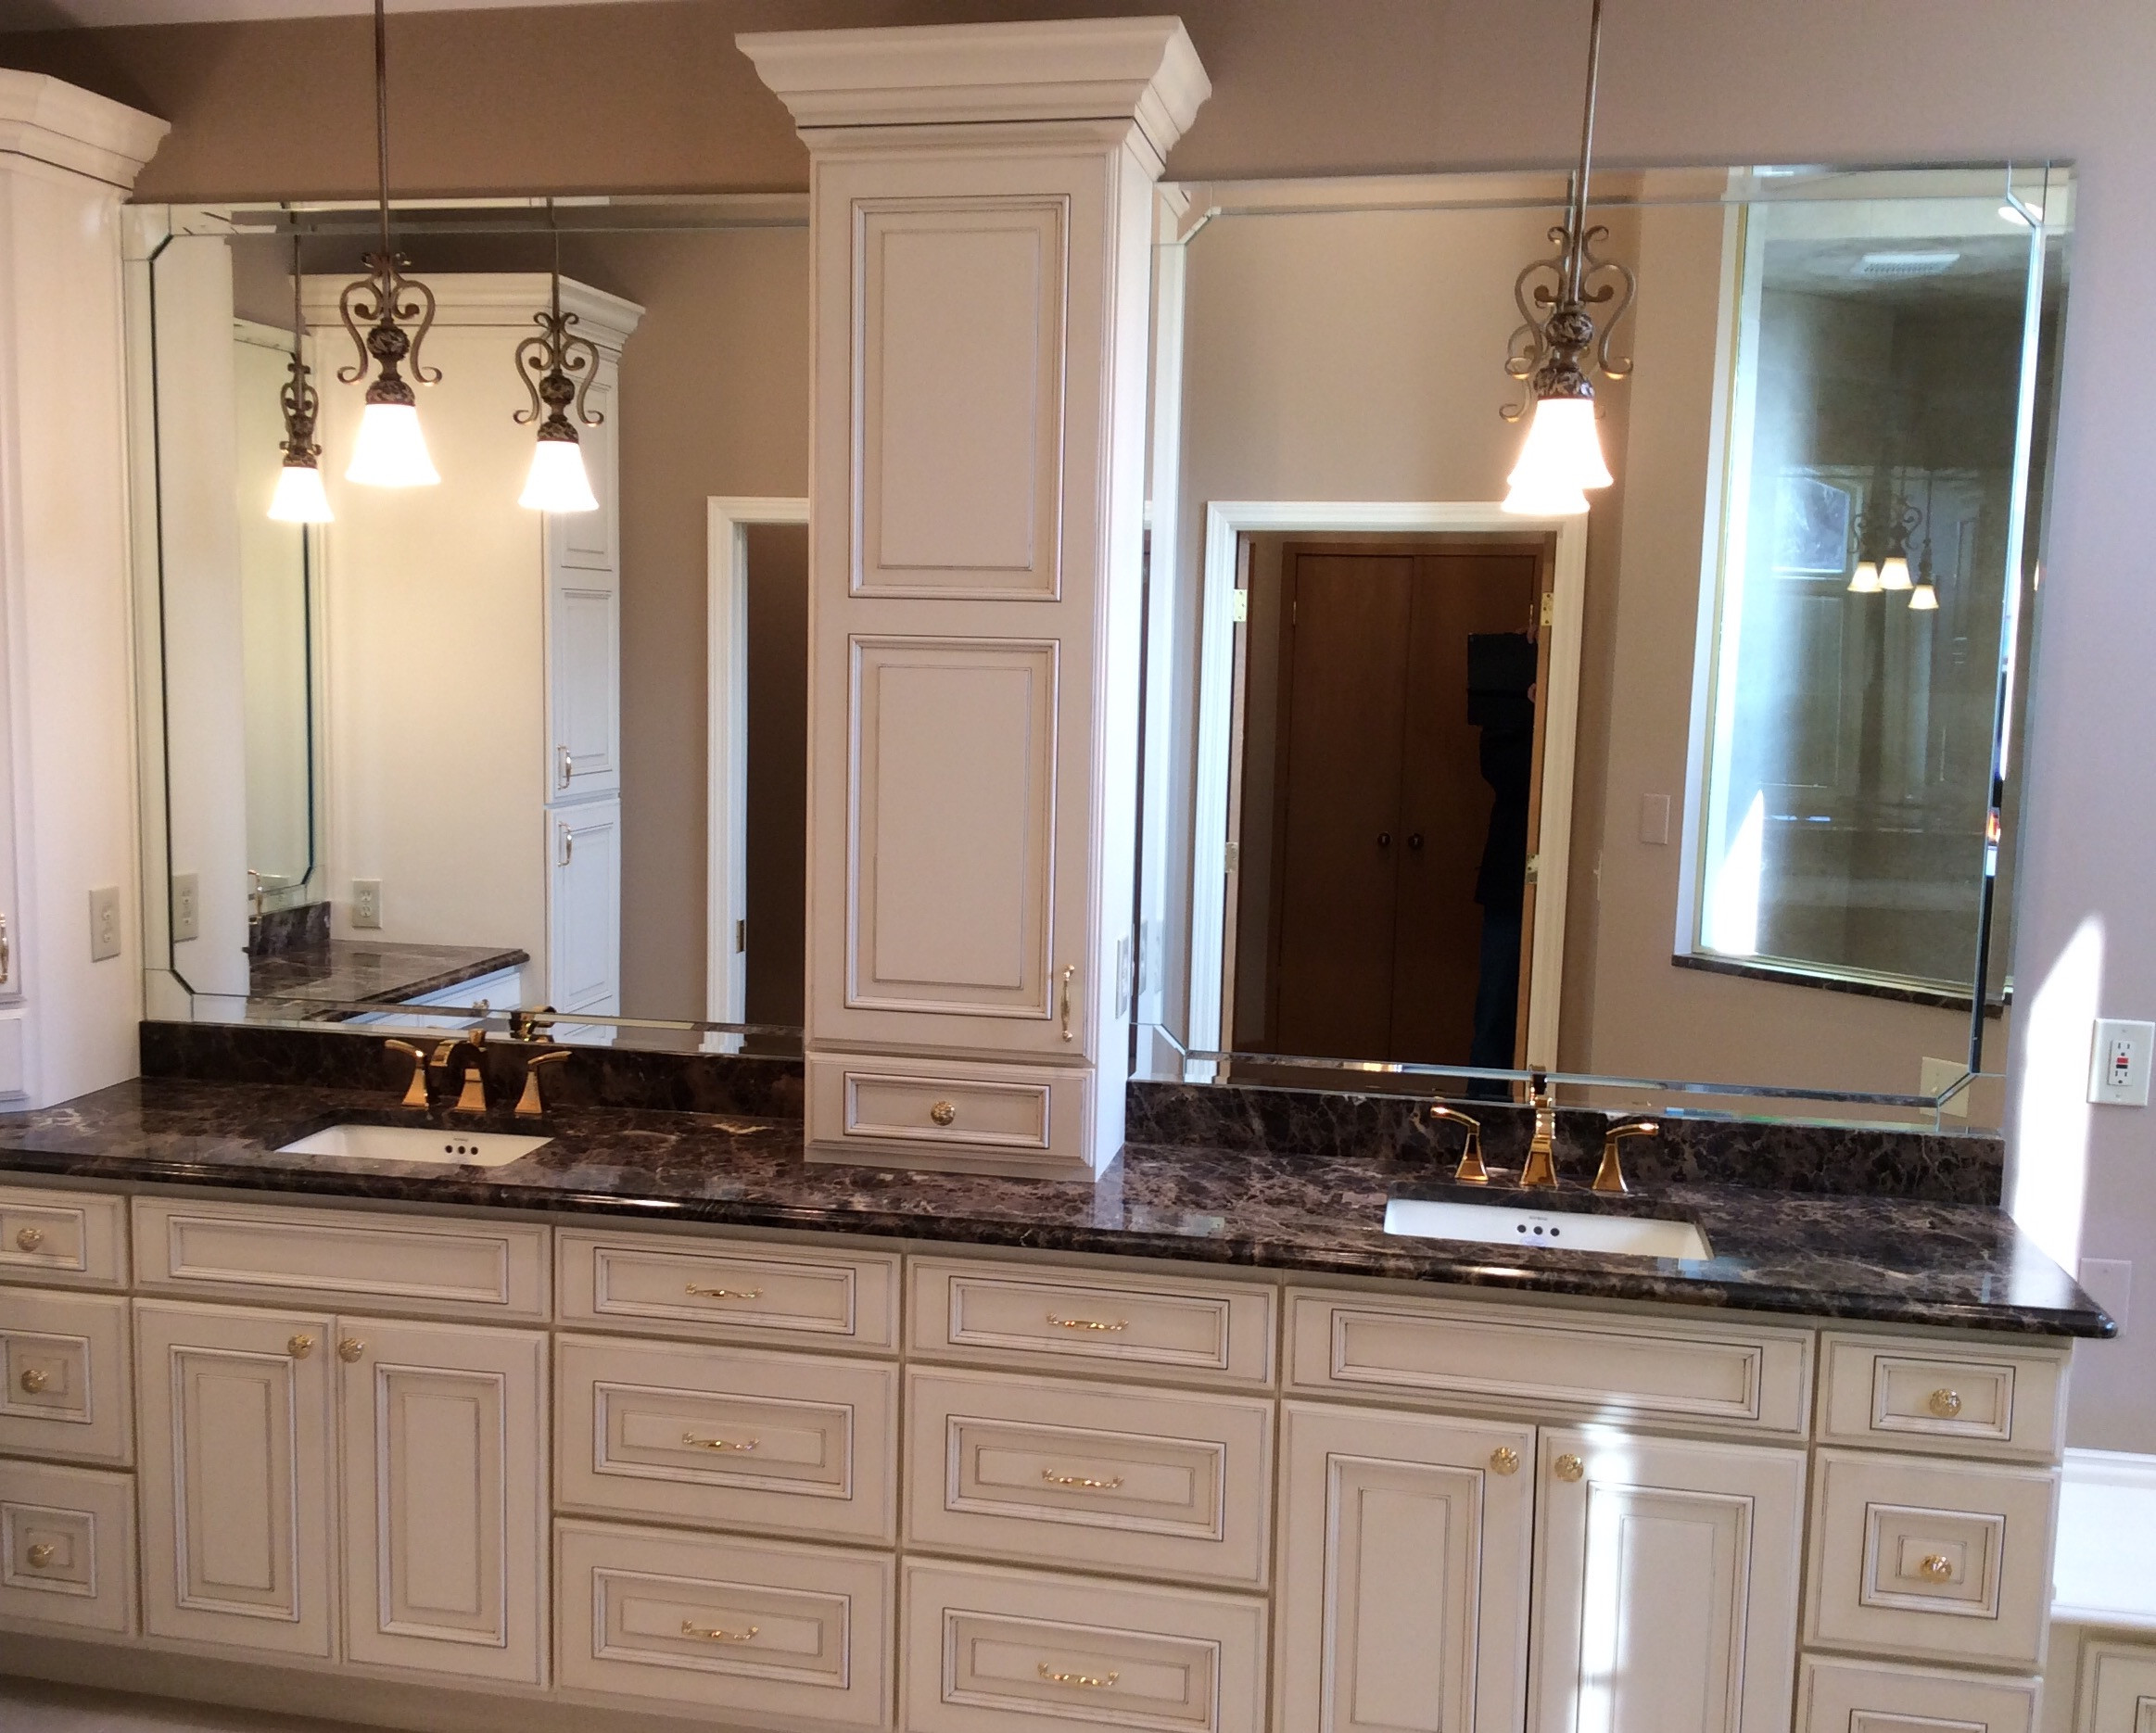 Bathroom Cabinets And Countertops
 Granite Countertop Gallery St Louis